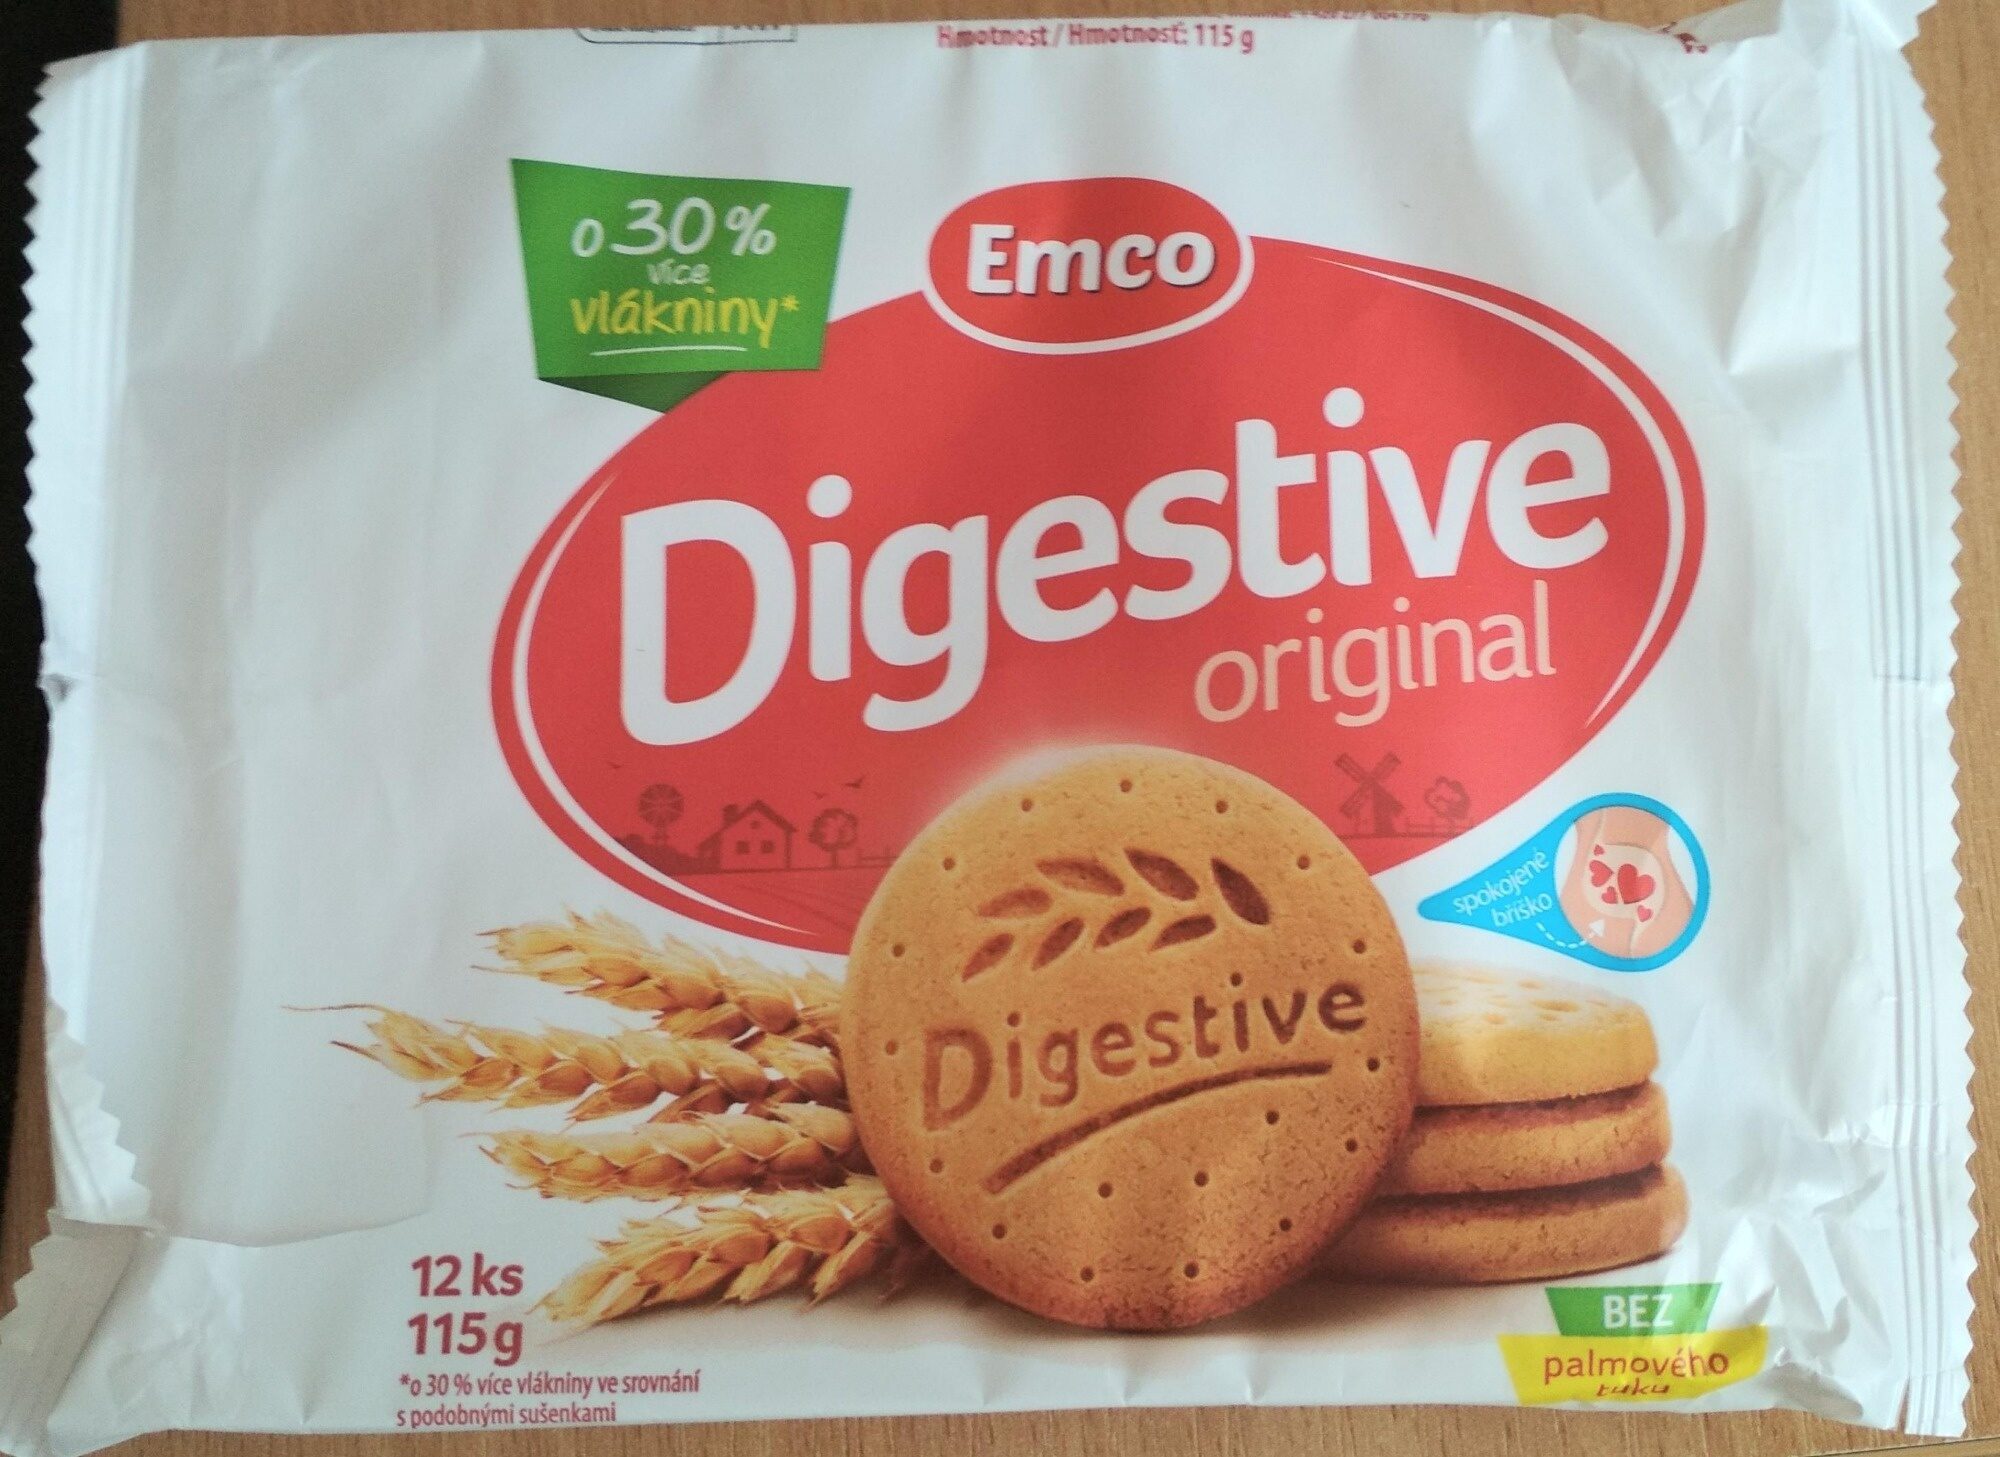 Emco Digestive Original - Product - sk